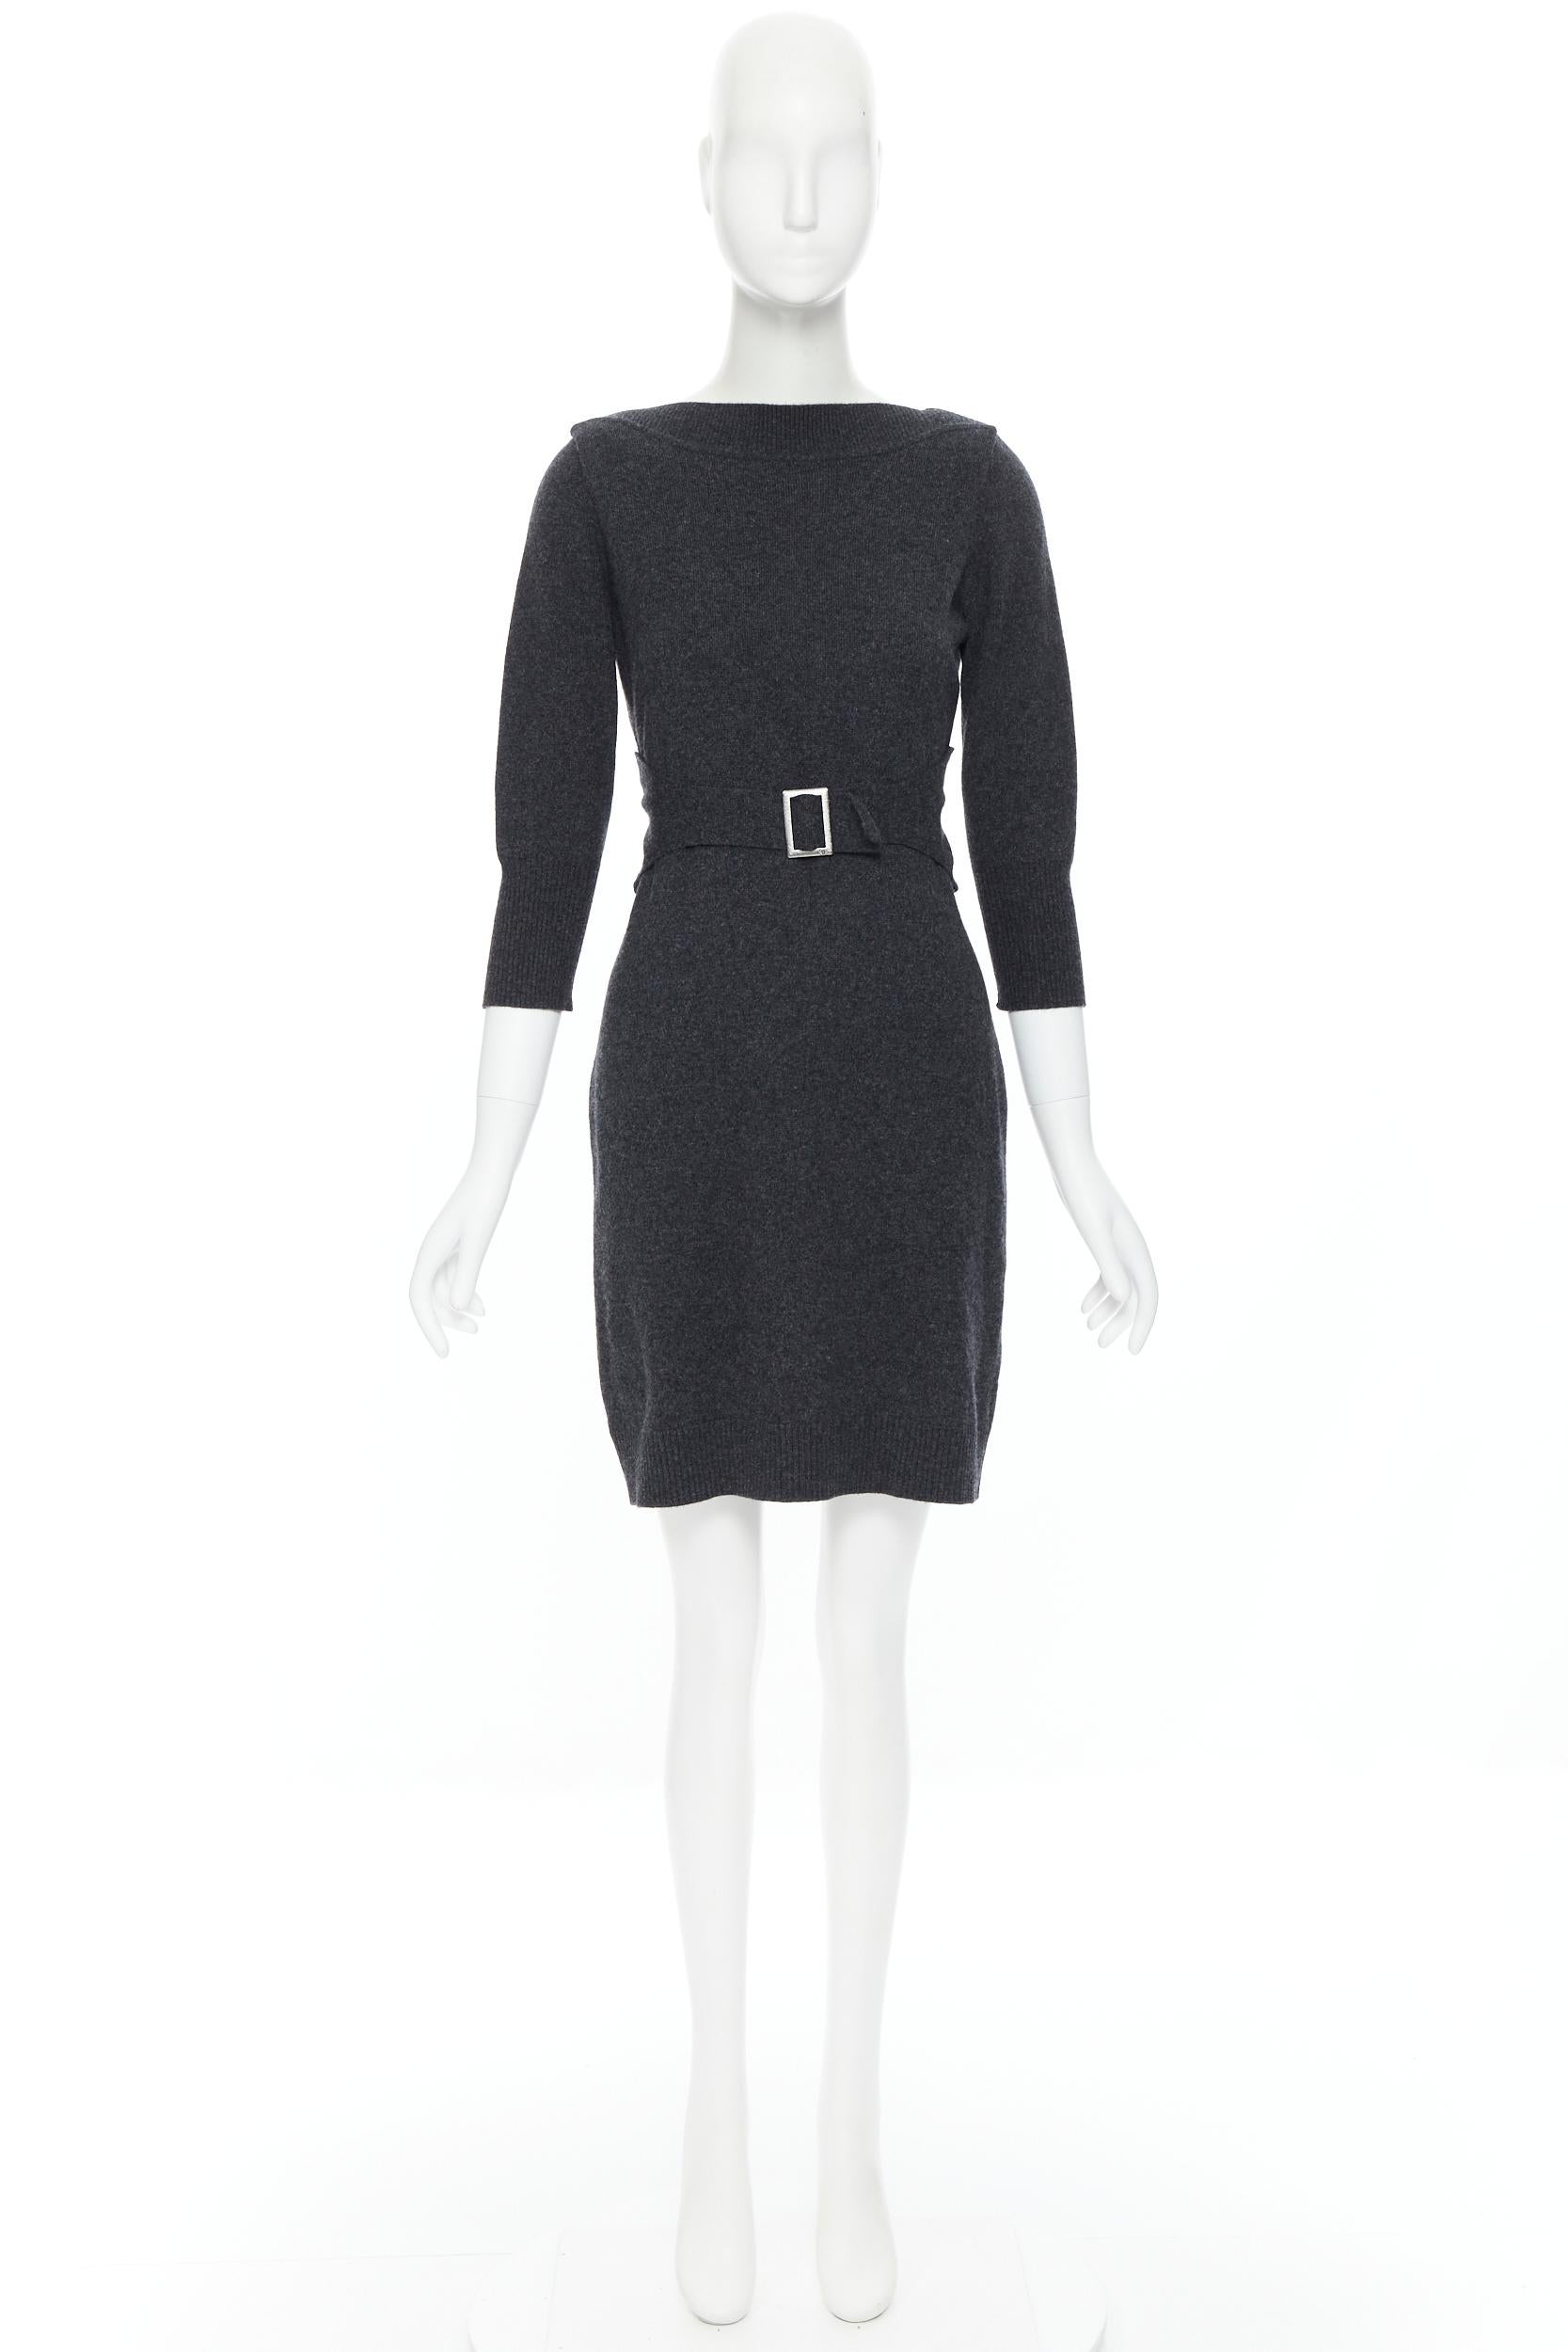 Black CHANEL 09A grey wool cashmere blend silver CC buckle design sweater dress FR38